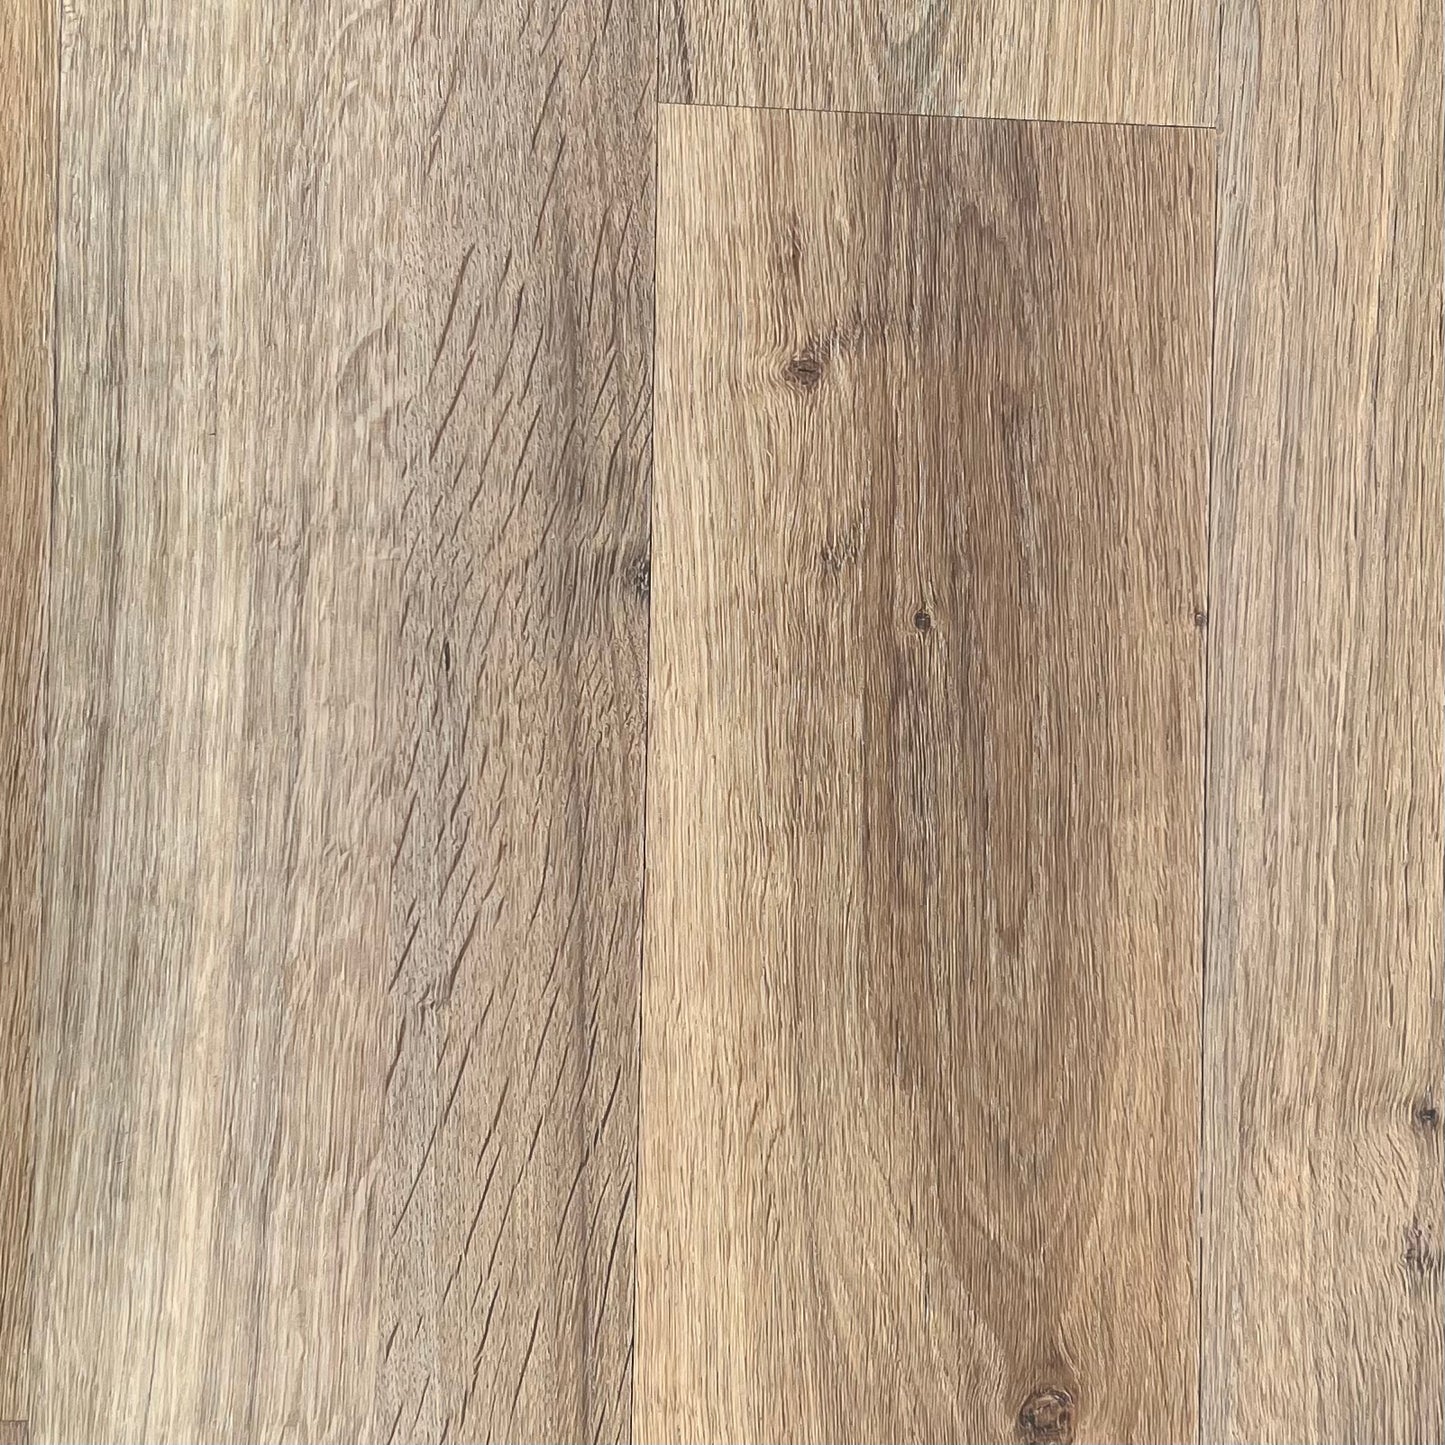 Invictus plank highland Oak Roasted 5mm £37.10 per sq mt